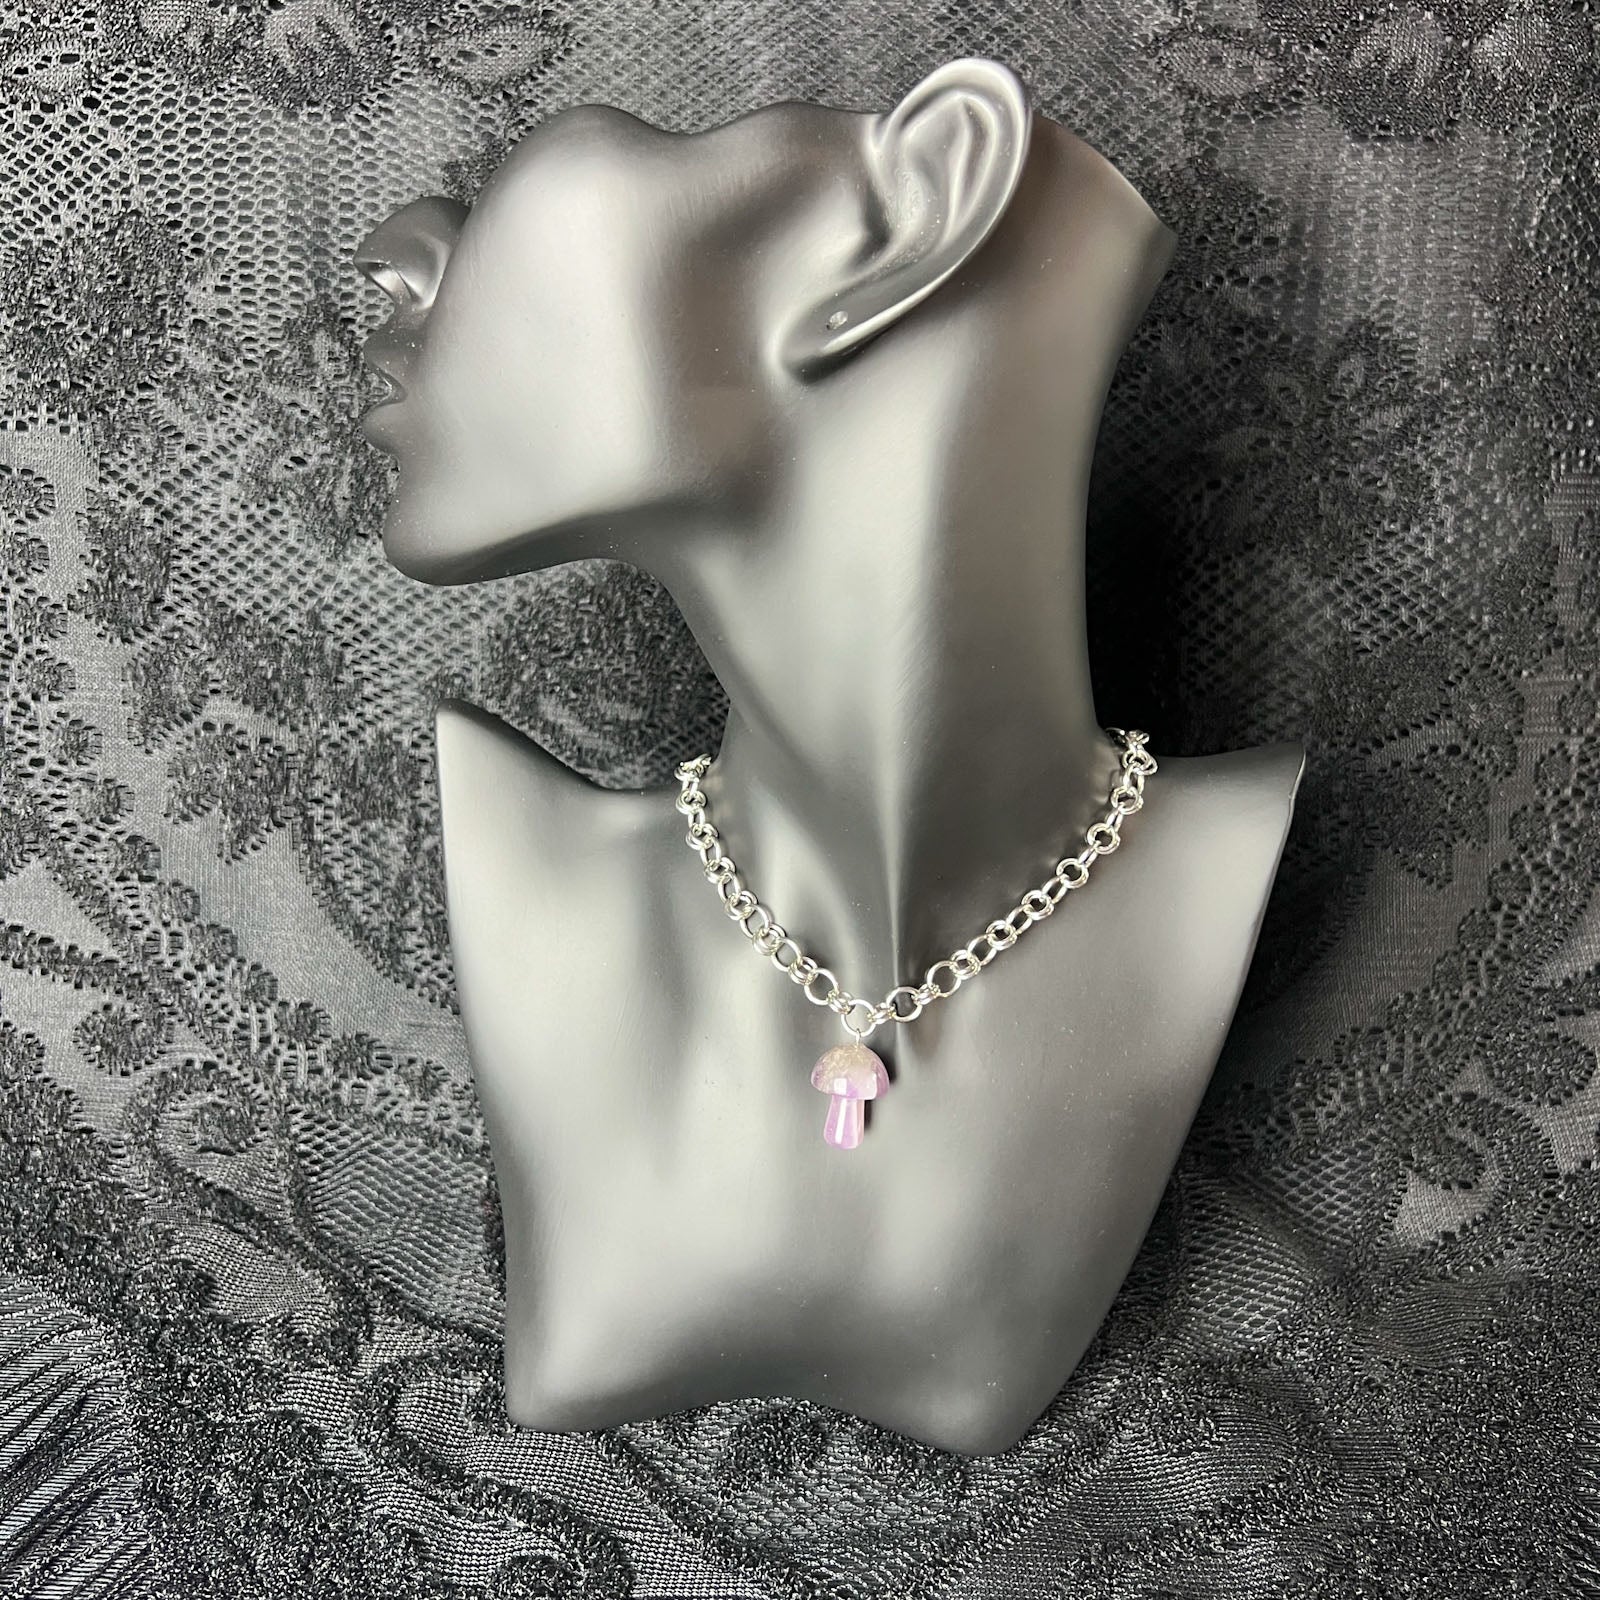 rose quartz amethyst gemstone mushroom pendant necklace stainless steel handmade chainmail chain cottagecore choker